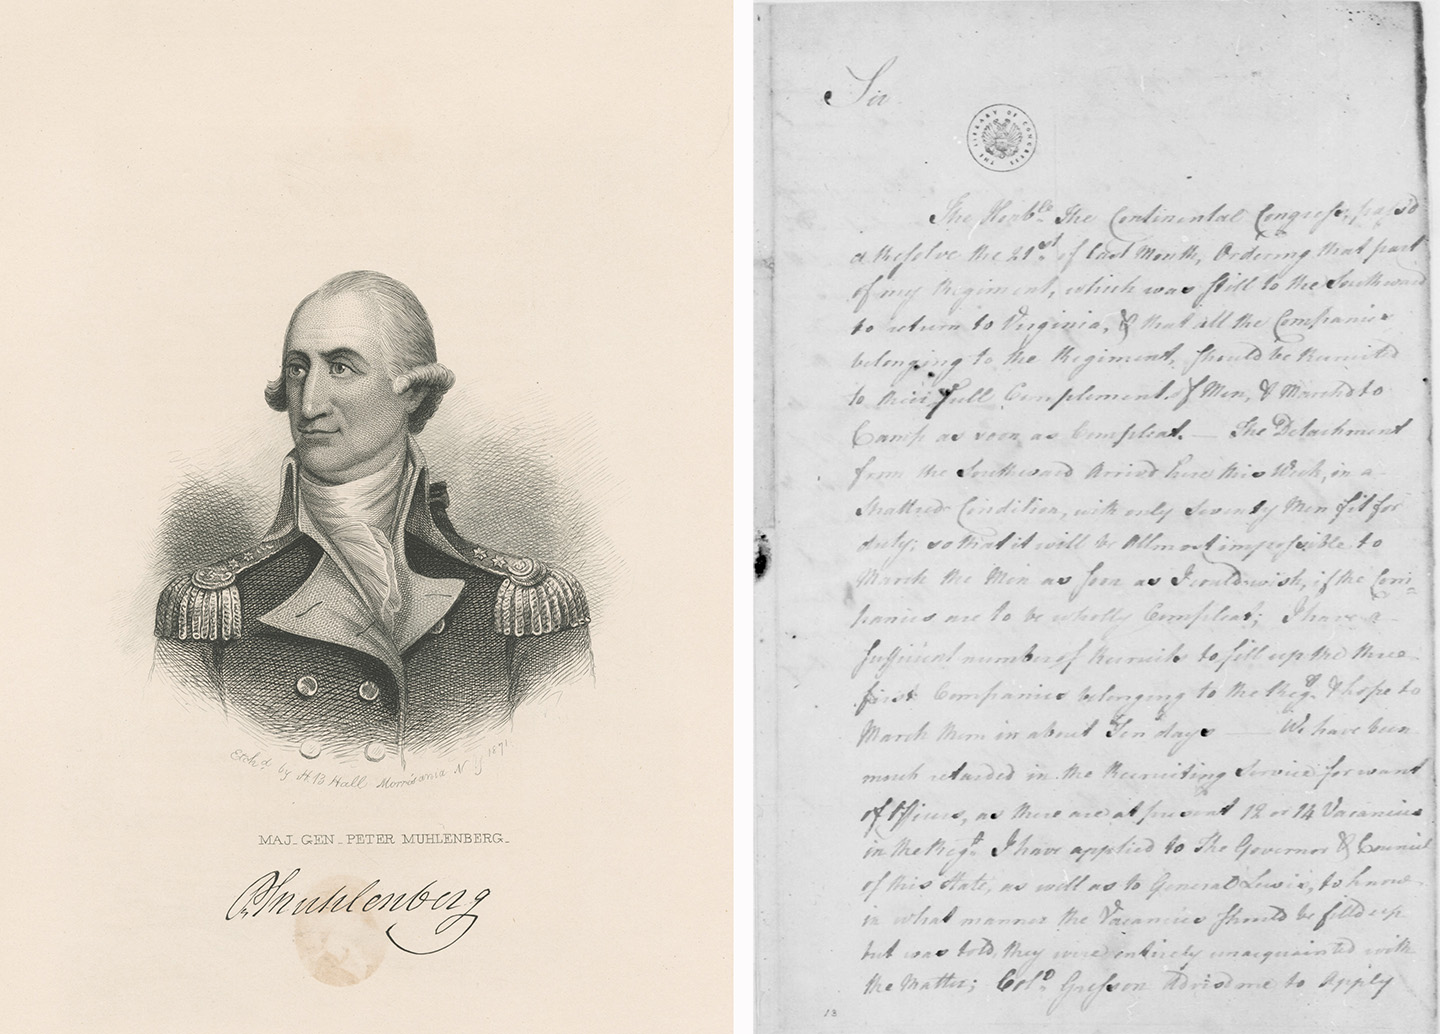 General Peter Muhlenberg and correspondence with George Washington